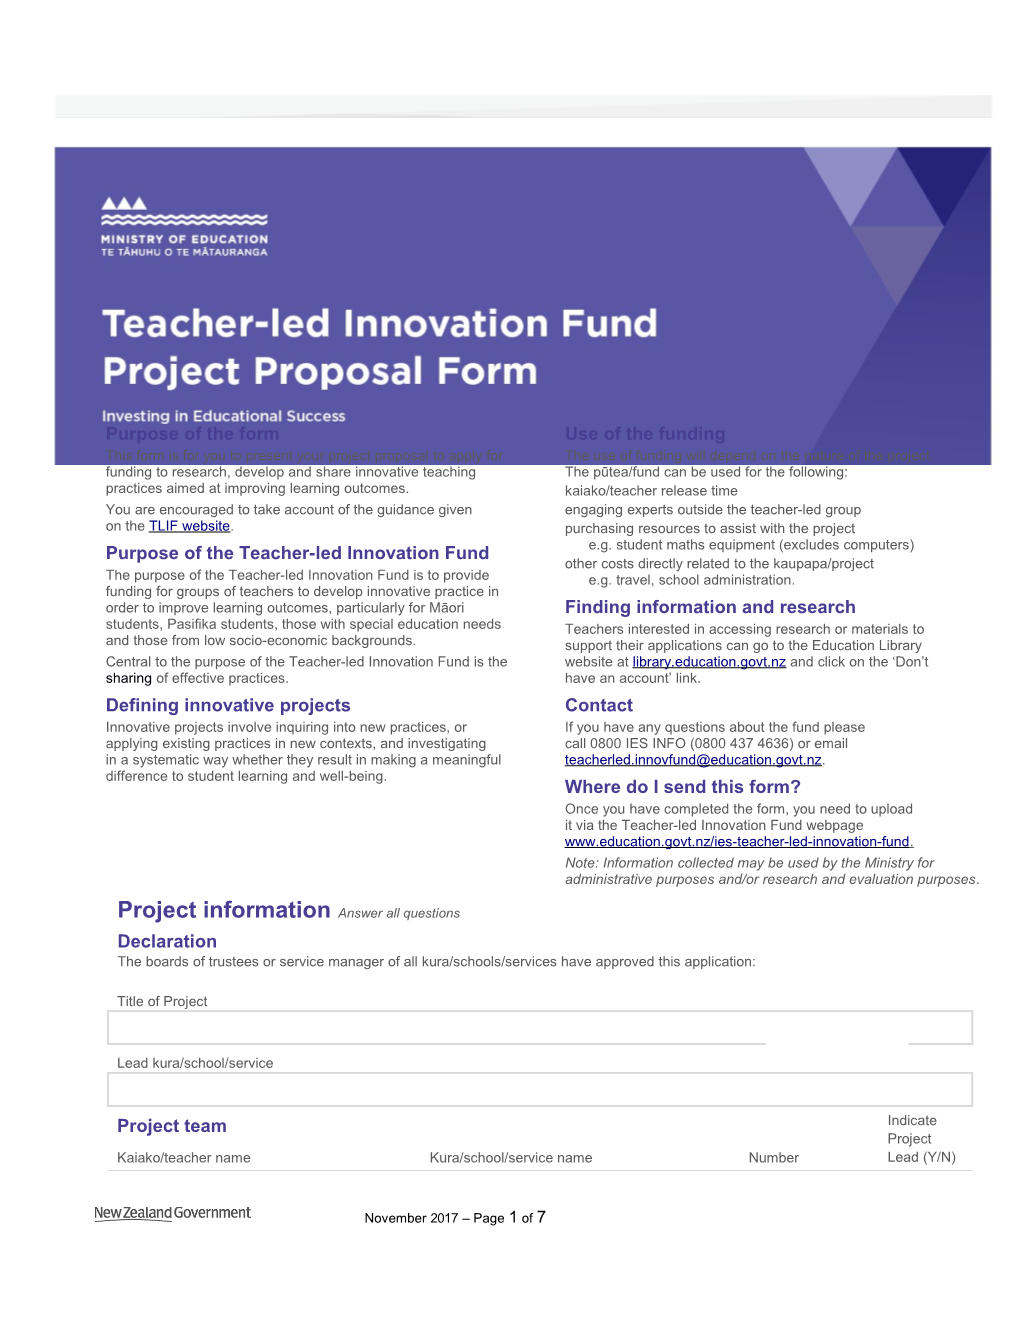 Purpose of the Teacher-Led Innovation Fund